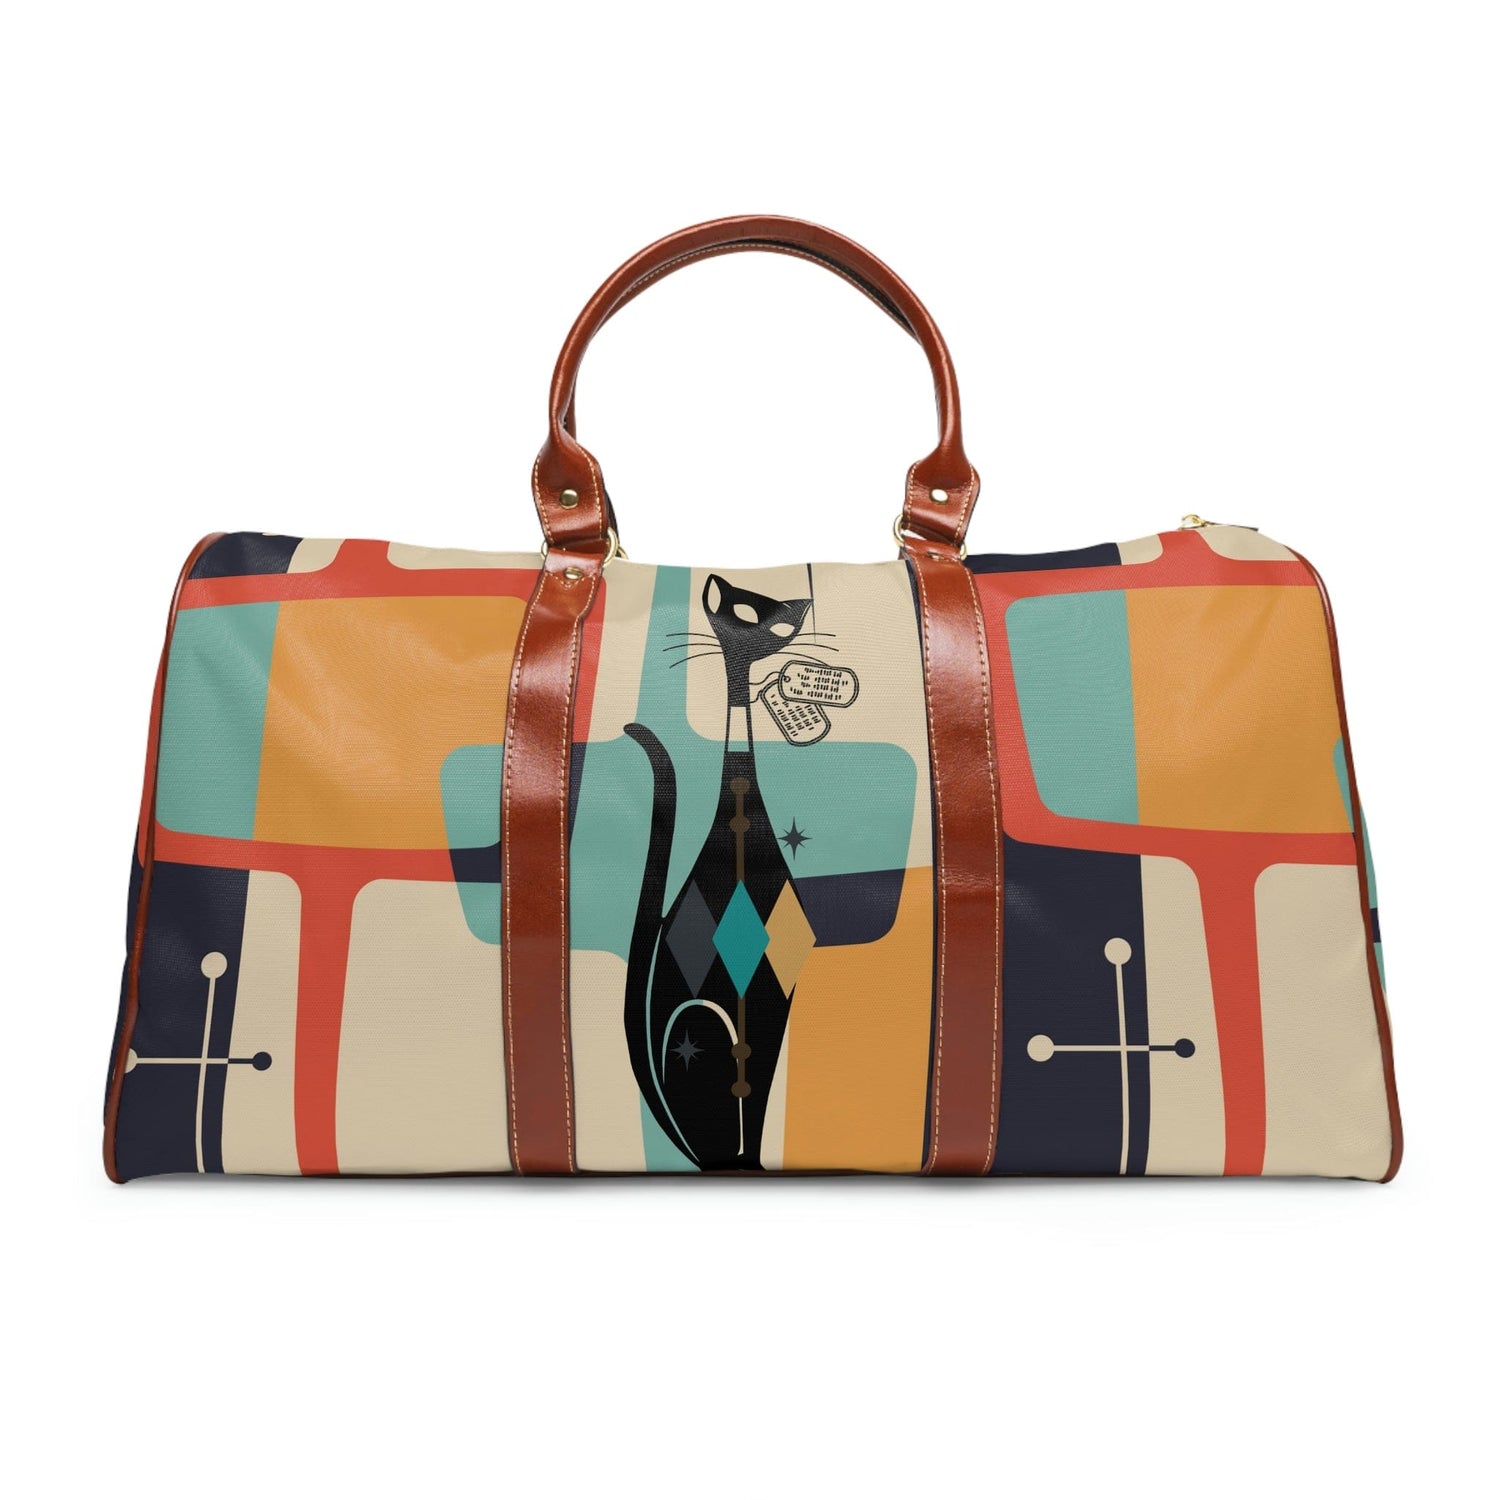 Canvas Duffle Bag Waterproof Canvas Travel Bag Stylish Canvas